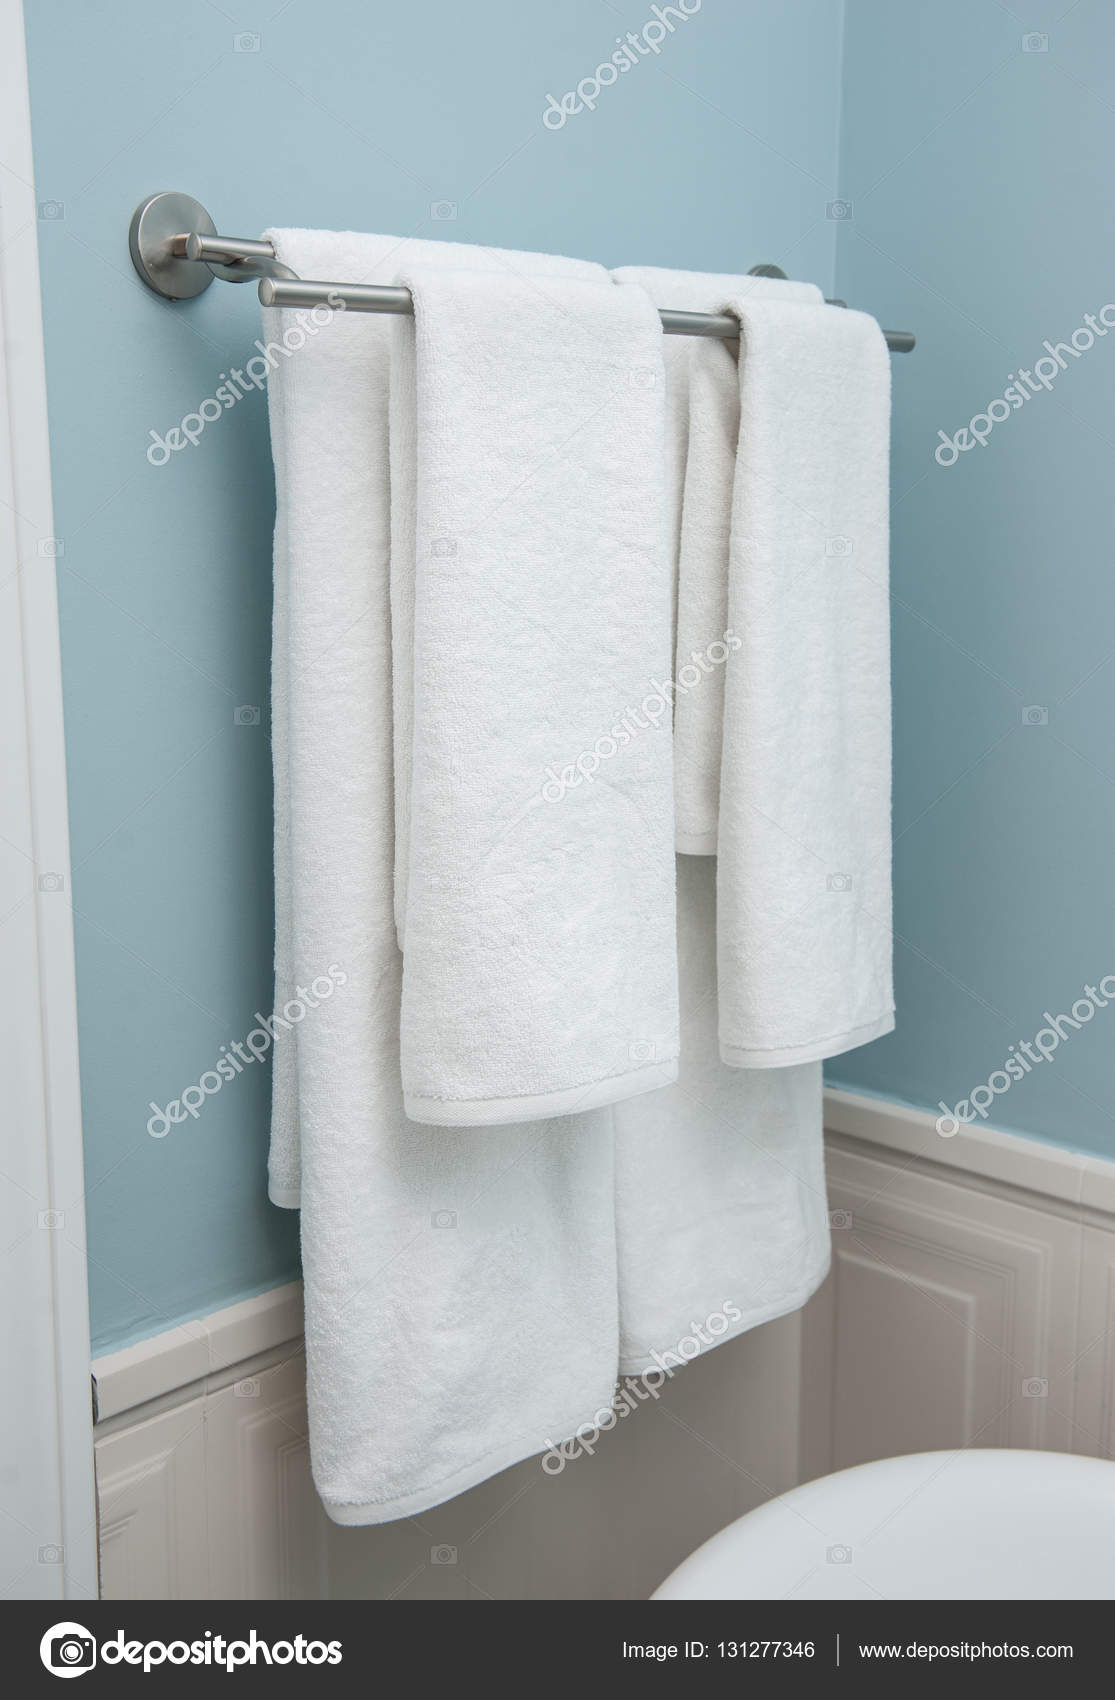 https://st3.depositphotos.com/1607142/13127/i/1600/depositphotos_131277346-stock-photo-two-towels-hanging-on-the.jpg